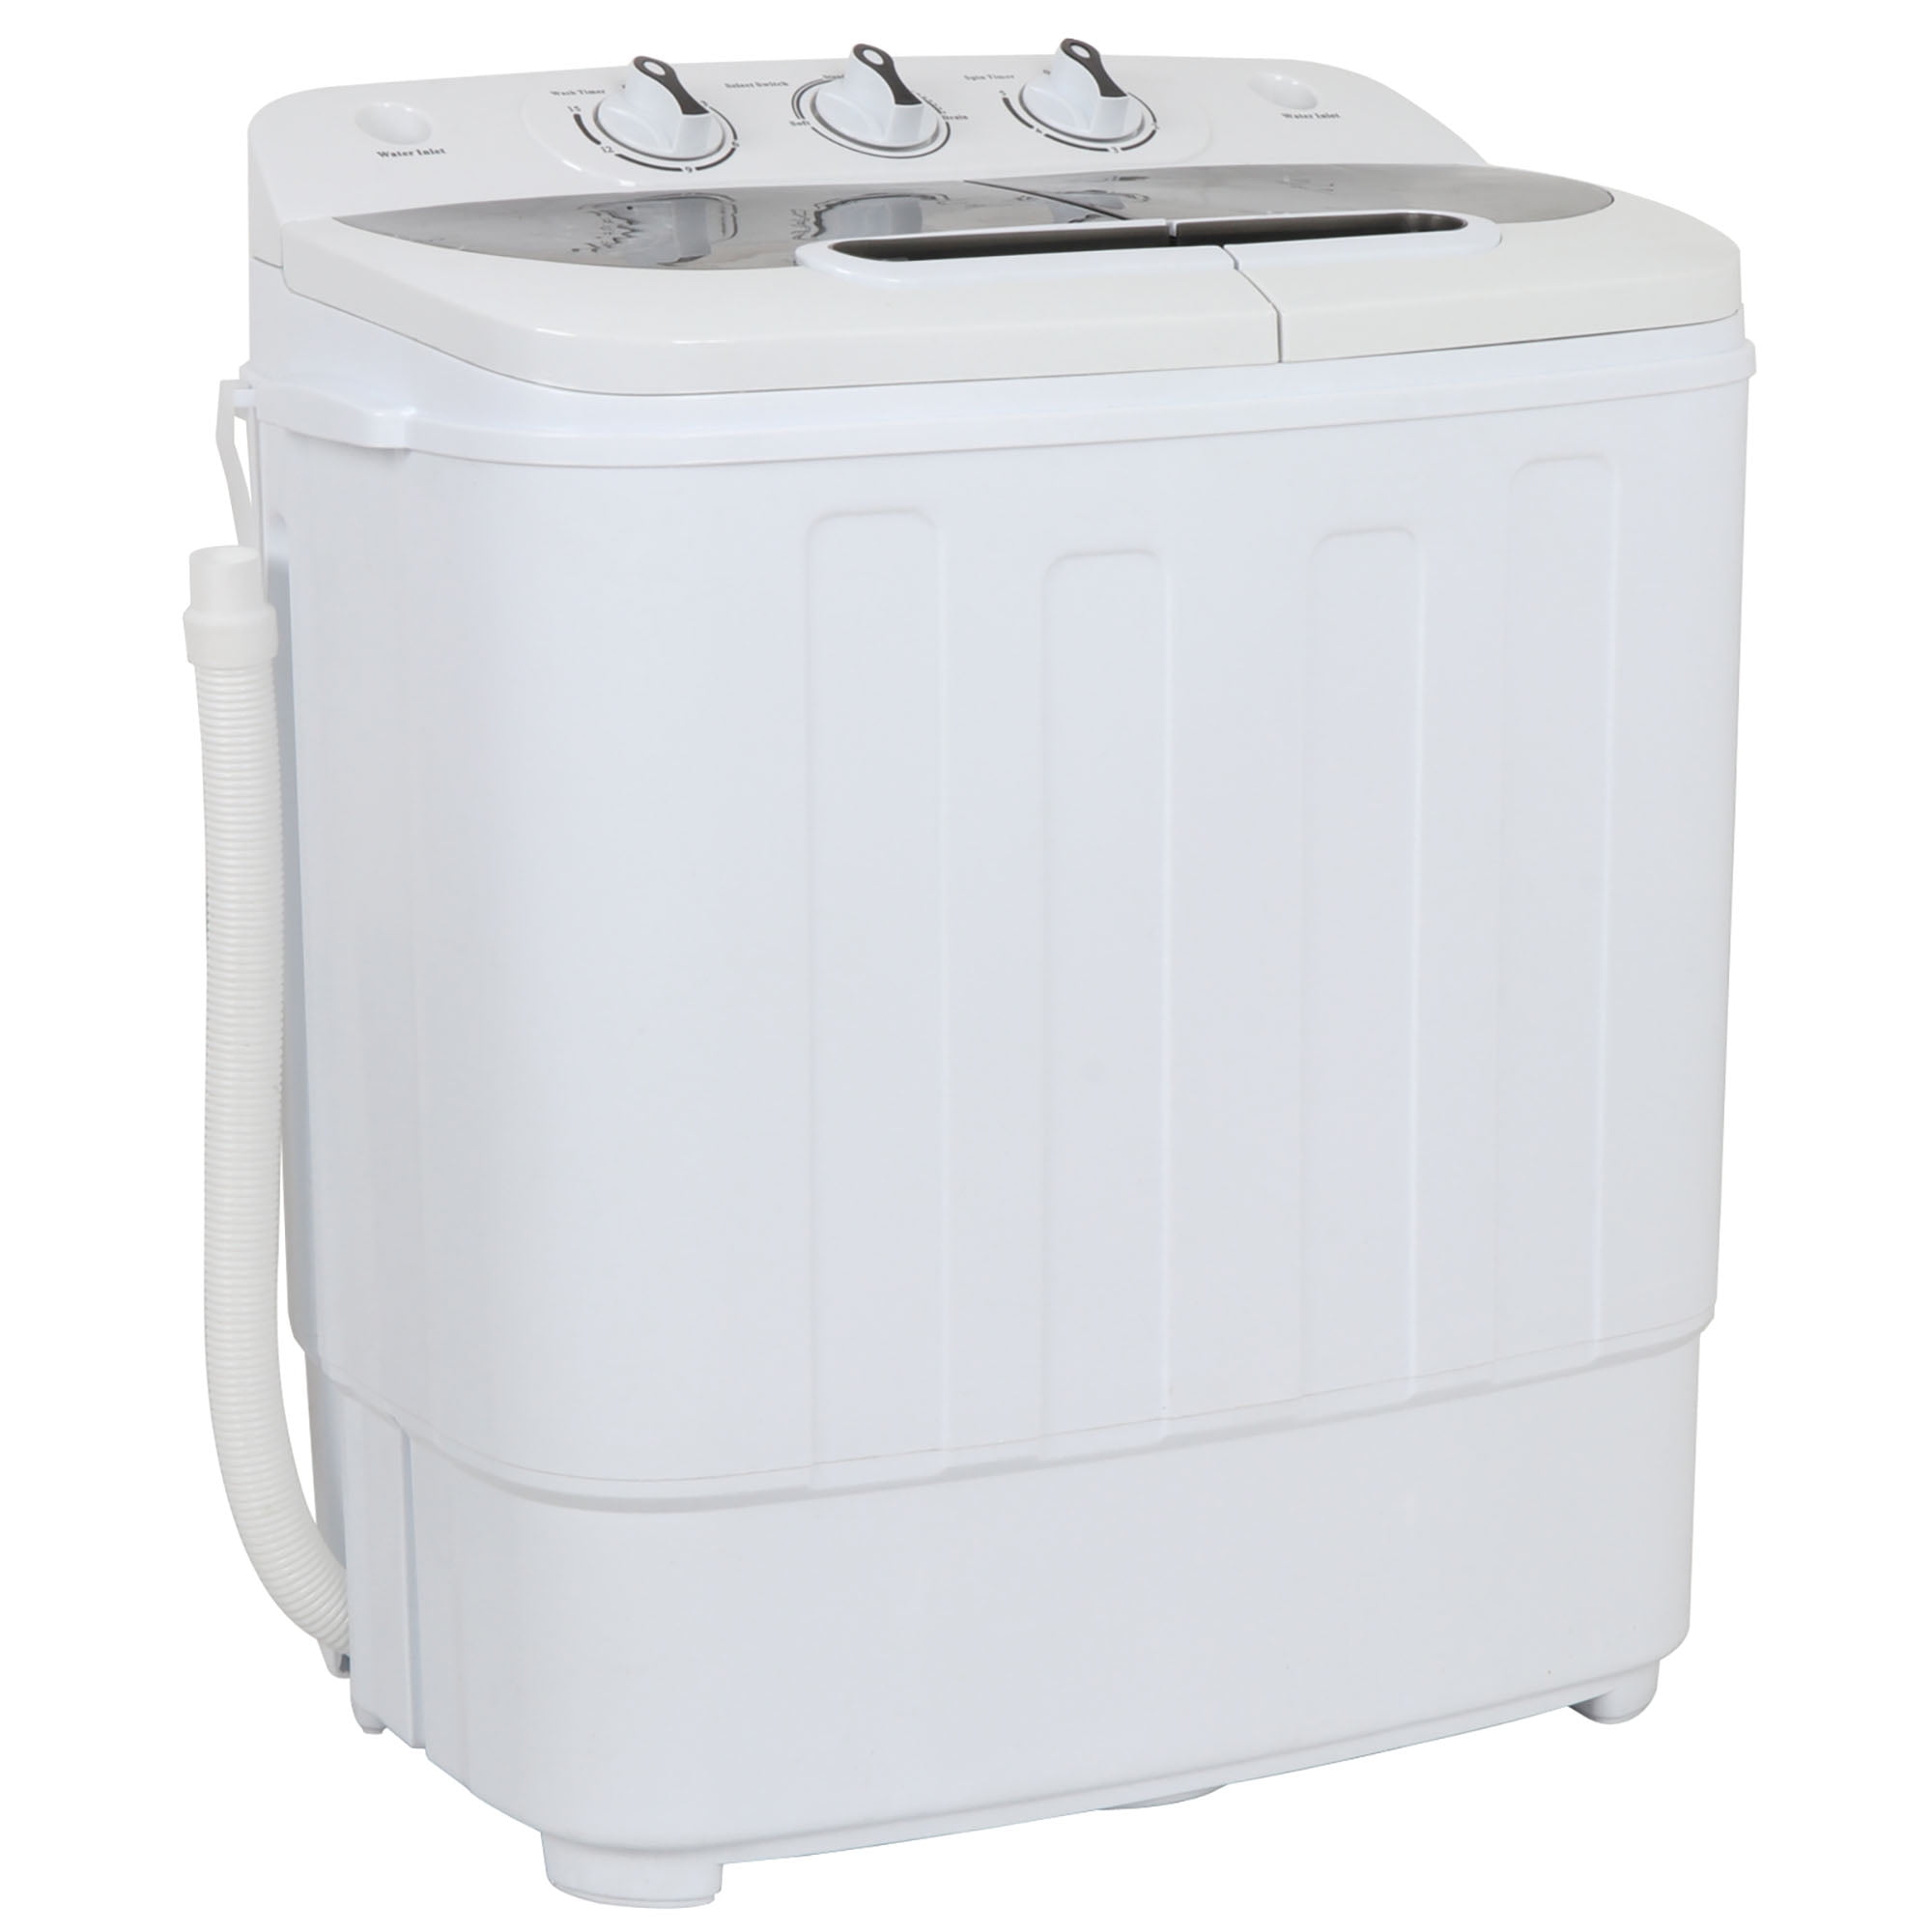 Costway 26lbs Portable Semi-automatic Twin Tub Washing Machine W